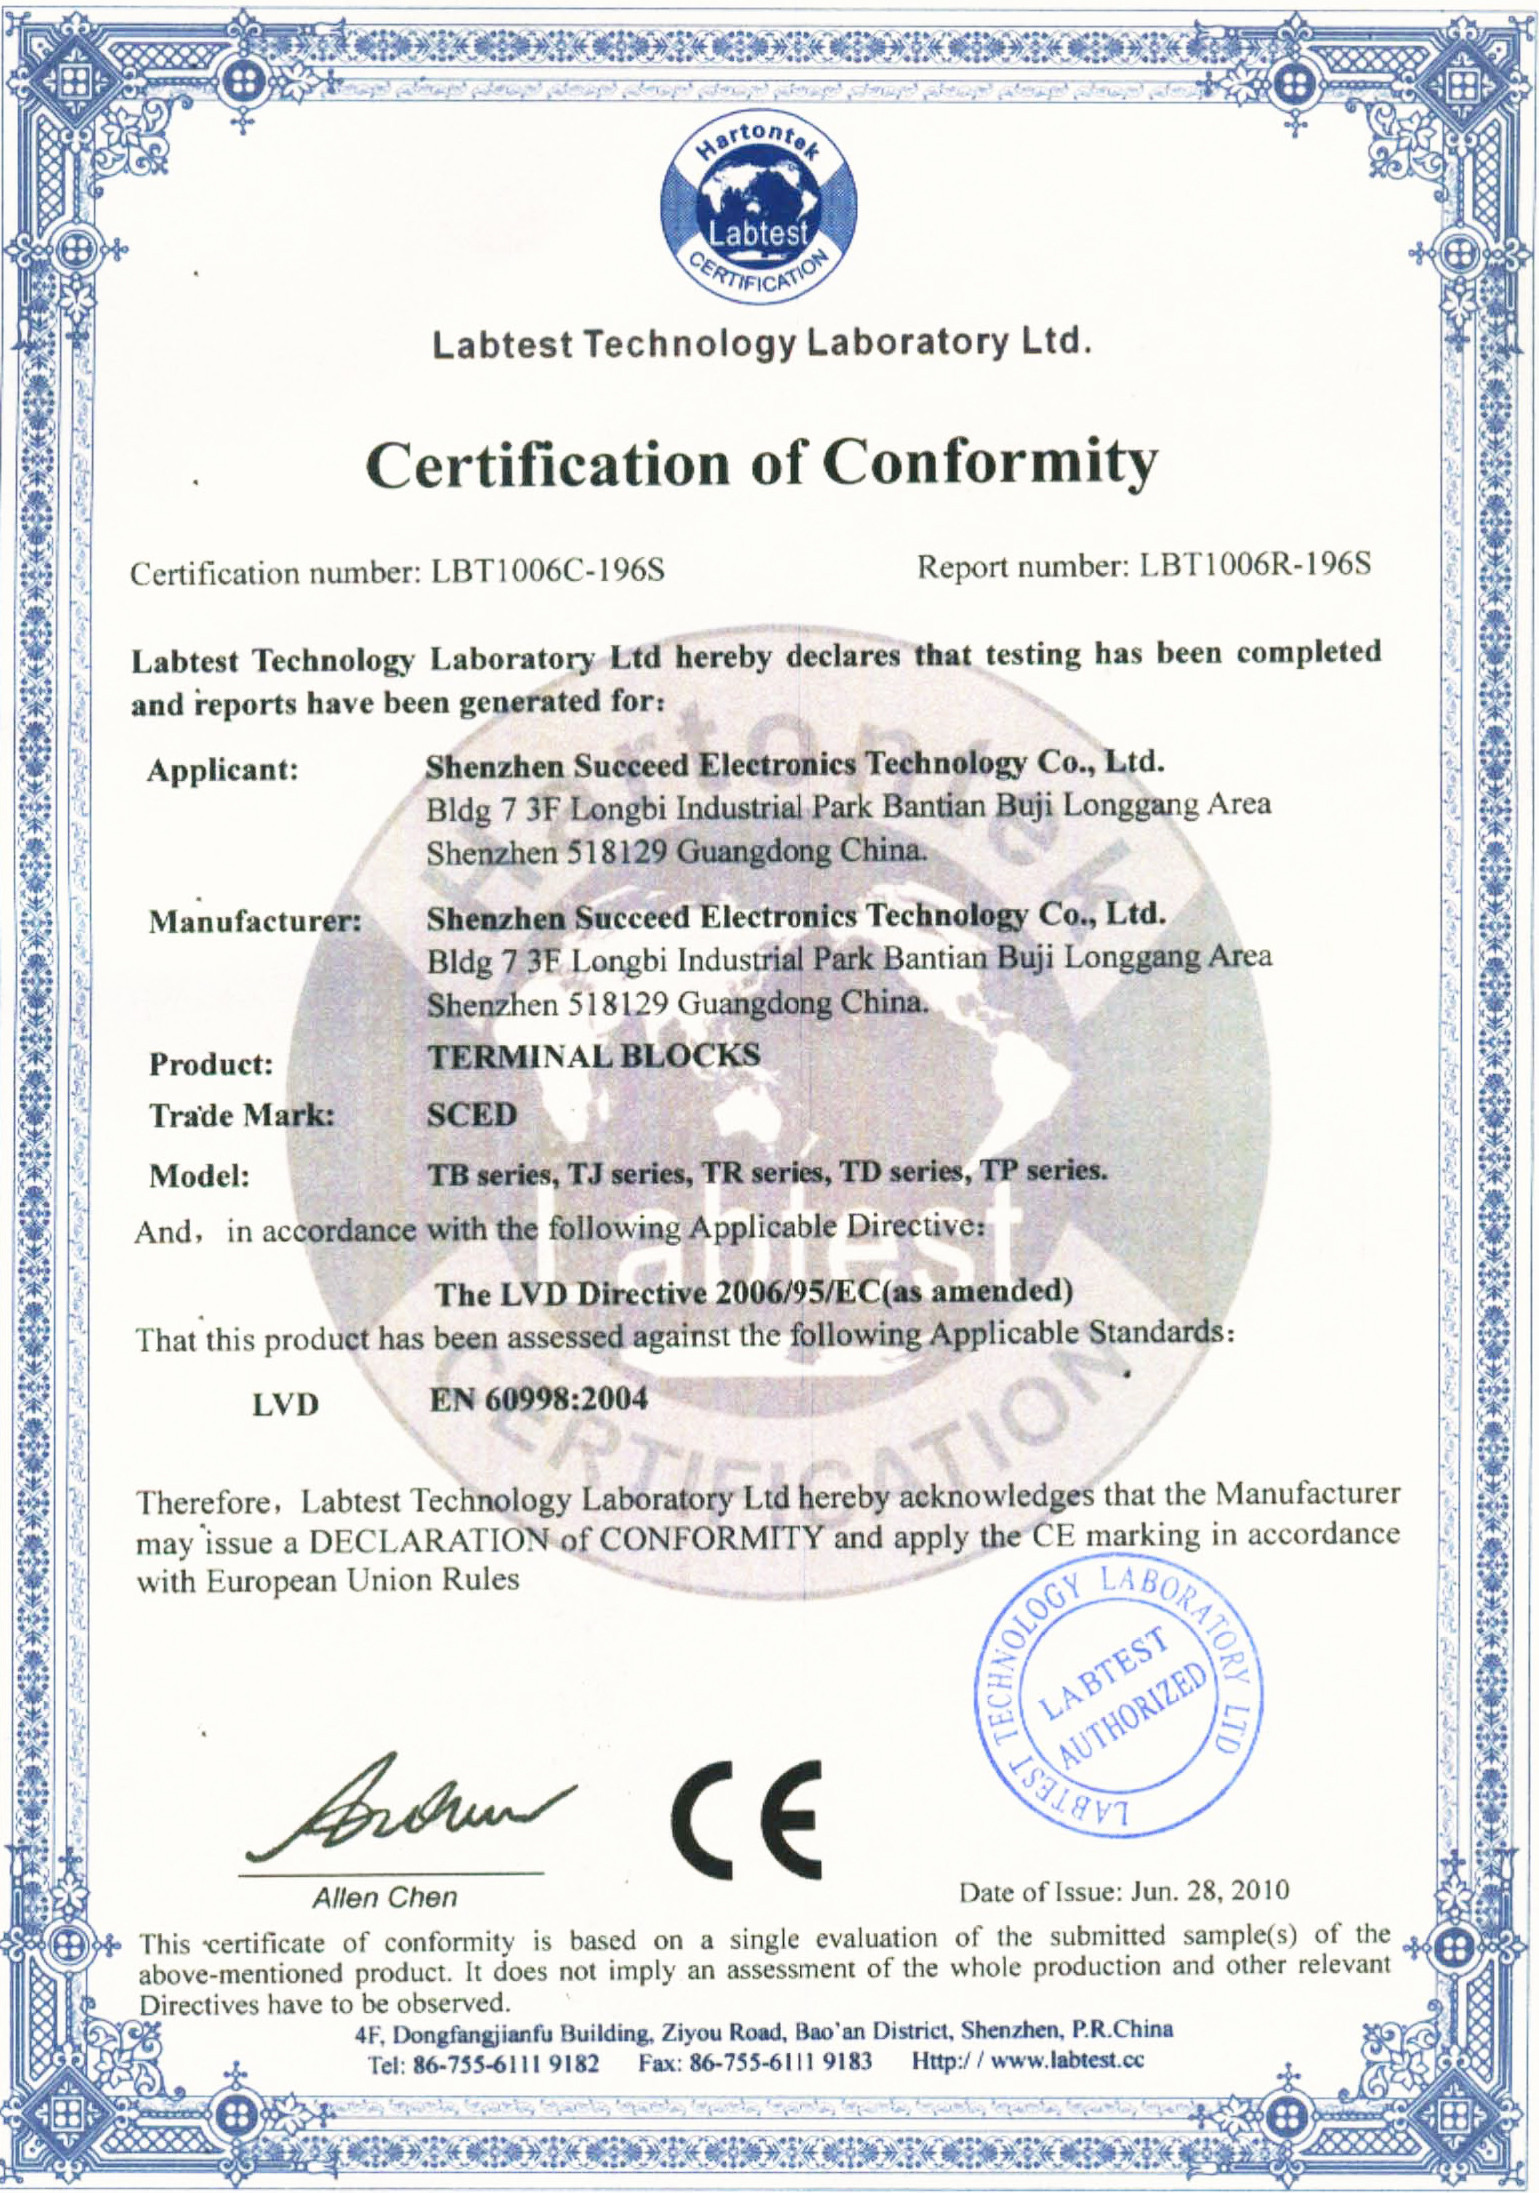 China SCED ELECTORNICS CO., LTD. Certification